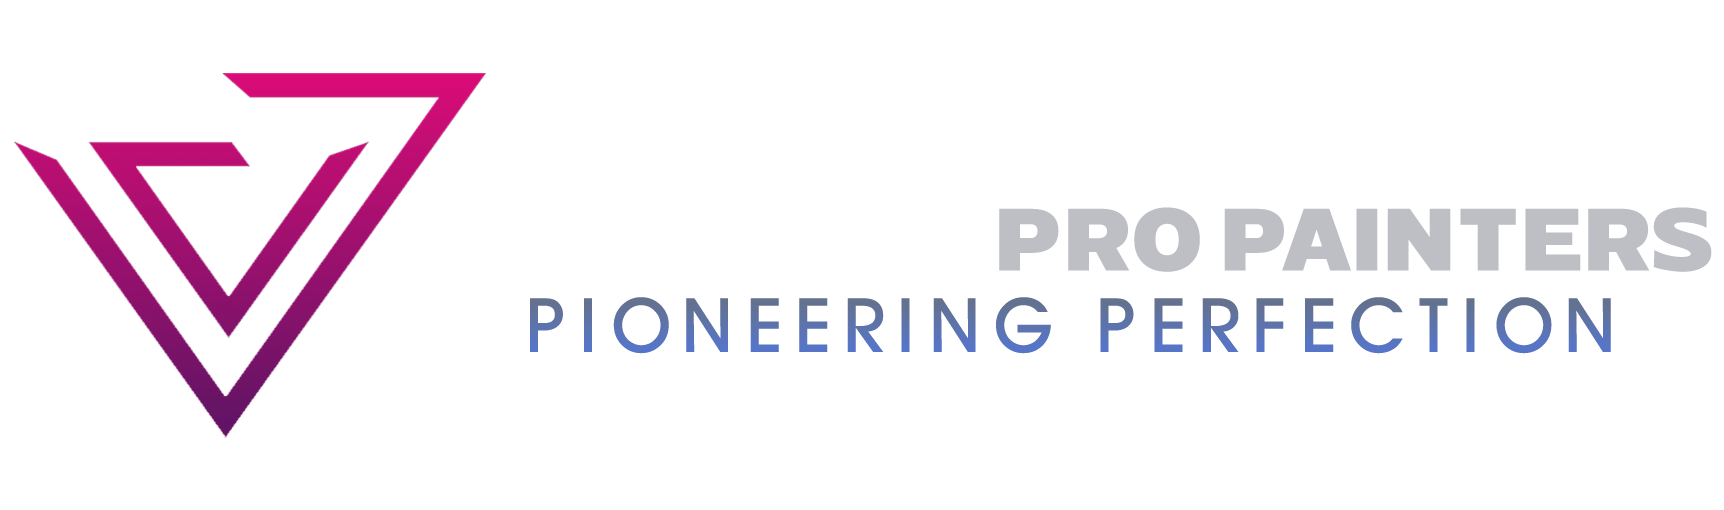 VanGuard Pro Painters Logo